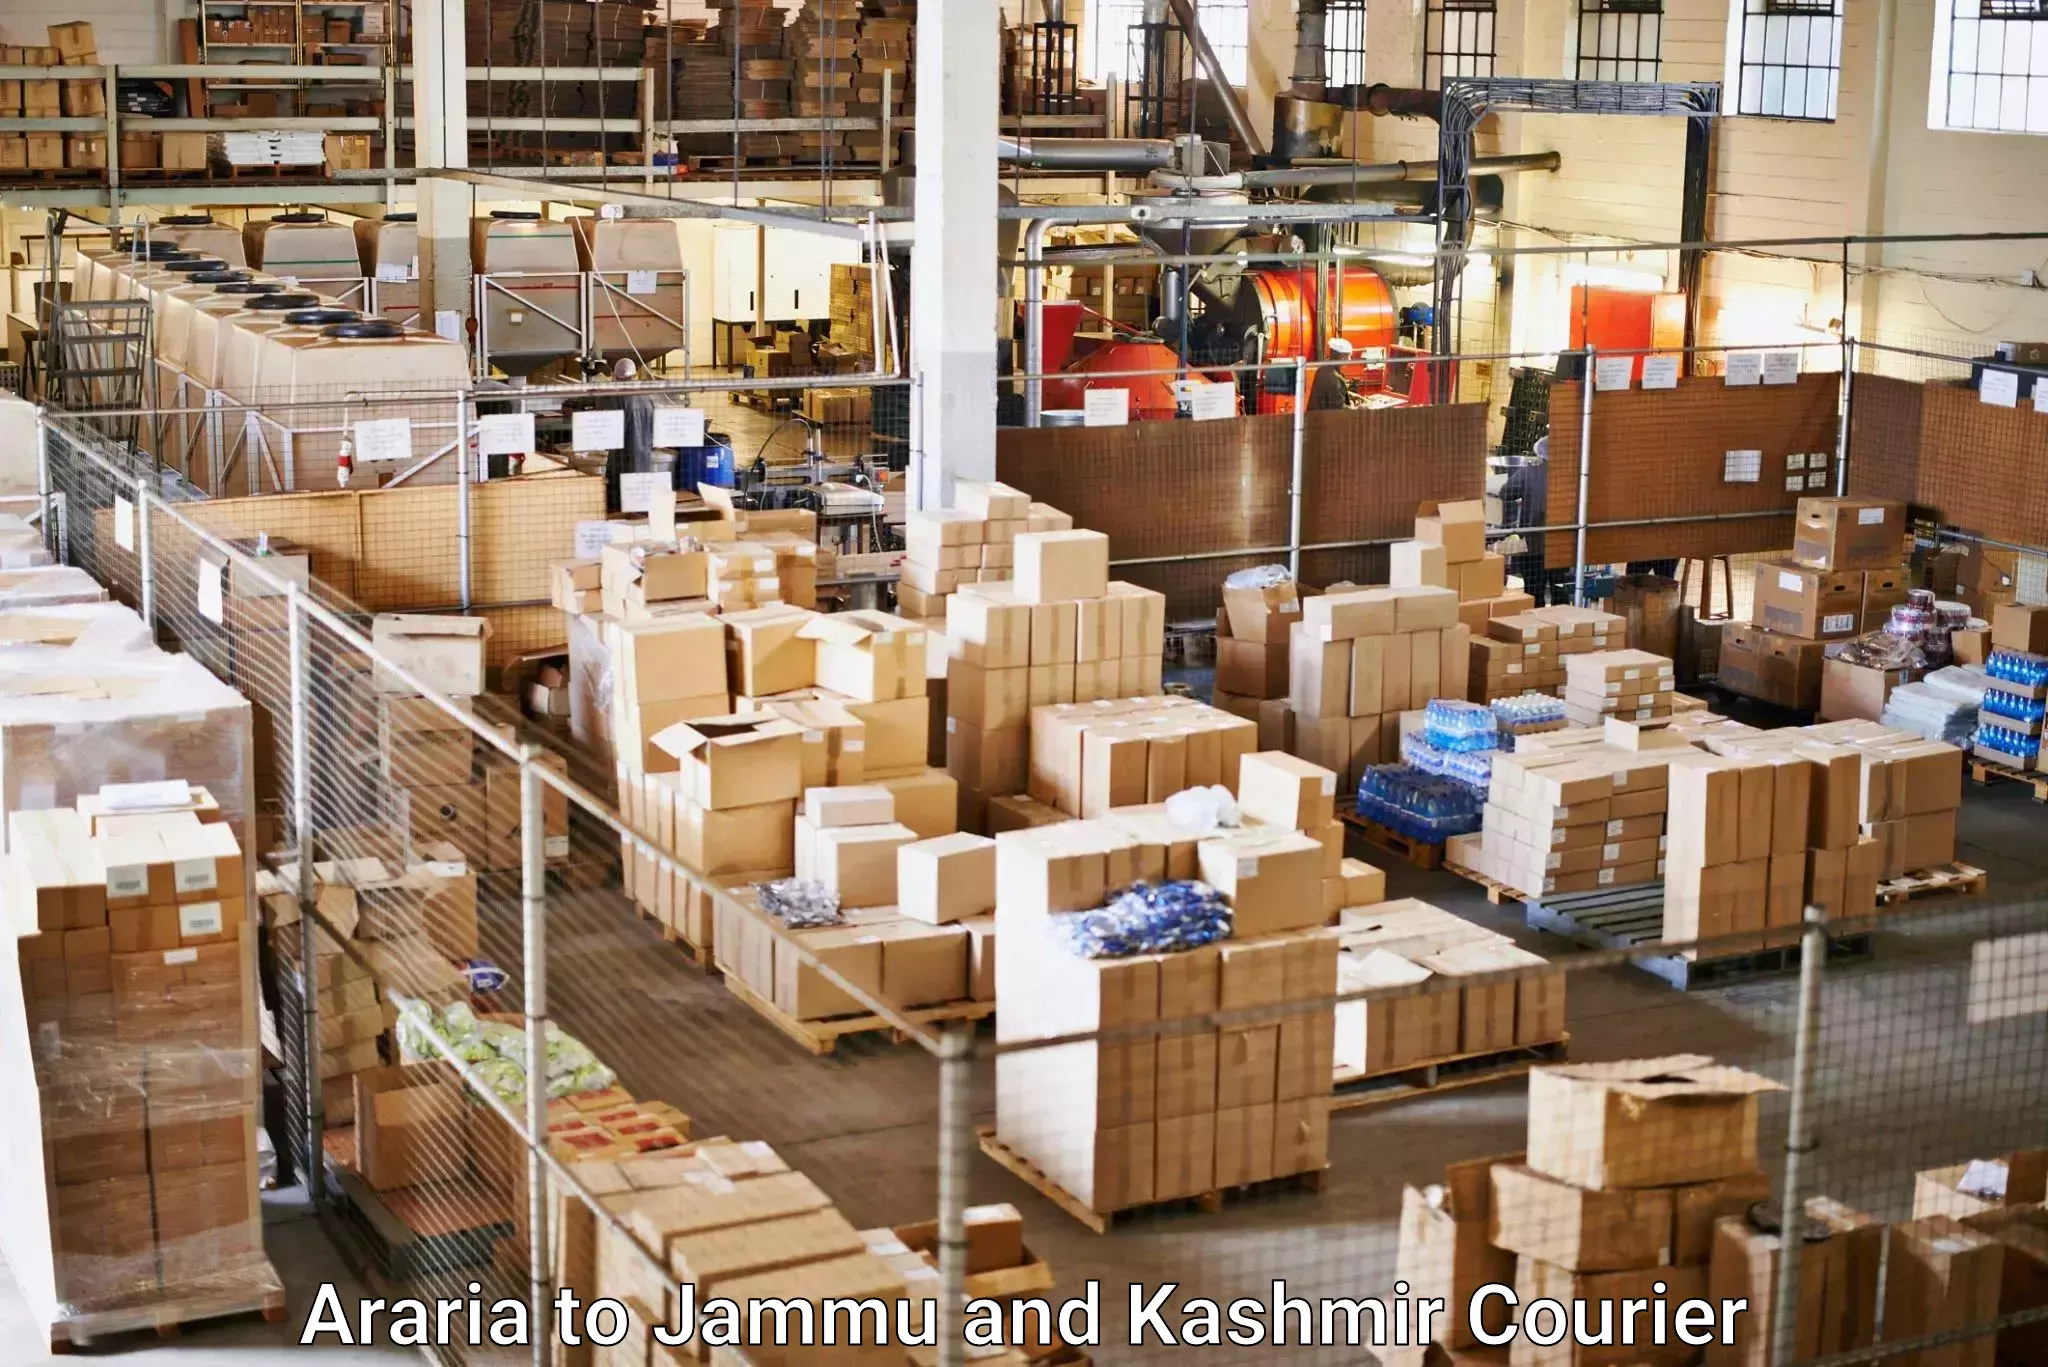 International parcel service Araria to Jammu and Kashmir